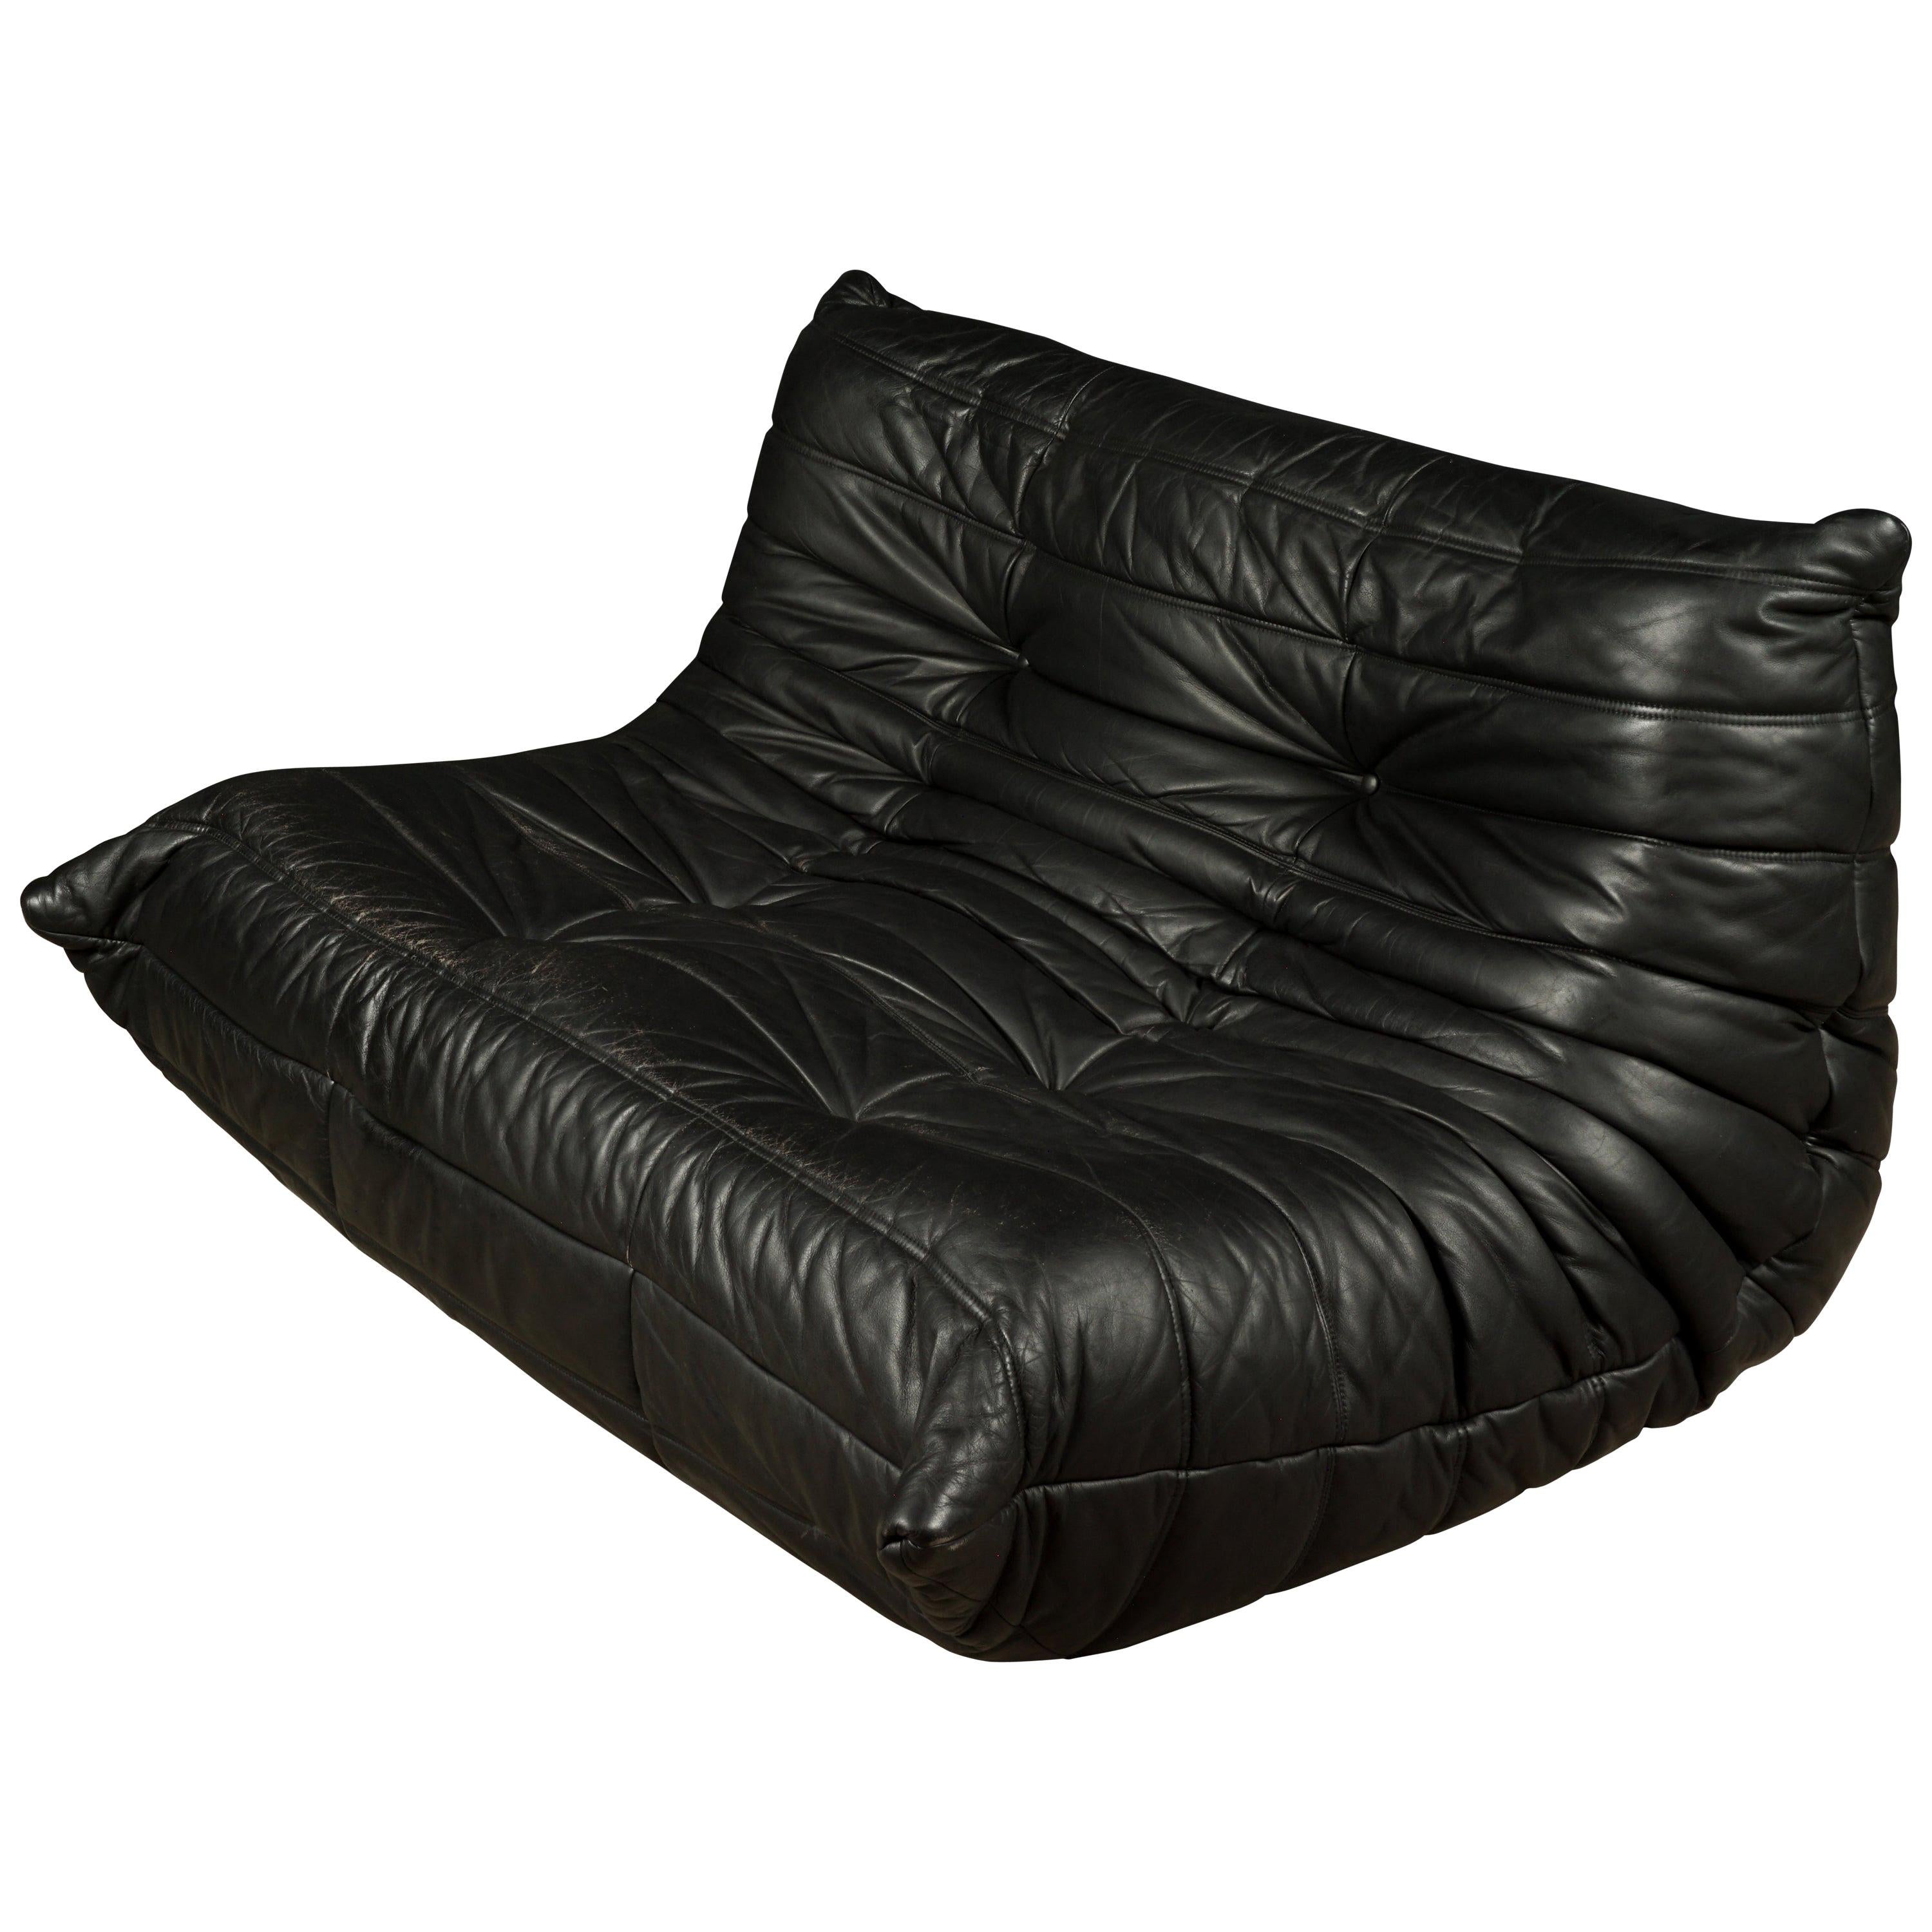 Vintage Leather Two-Seat Sofa, Model "Togo" by Michel Ducaroy for Ligne Roset